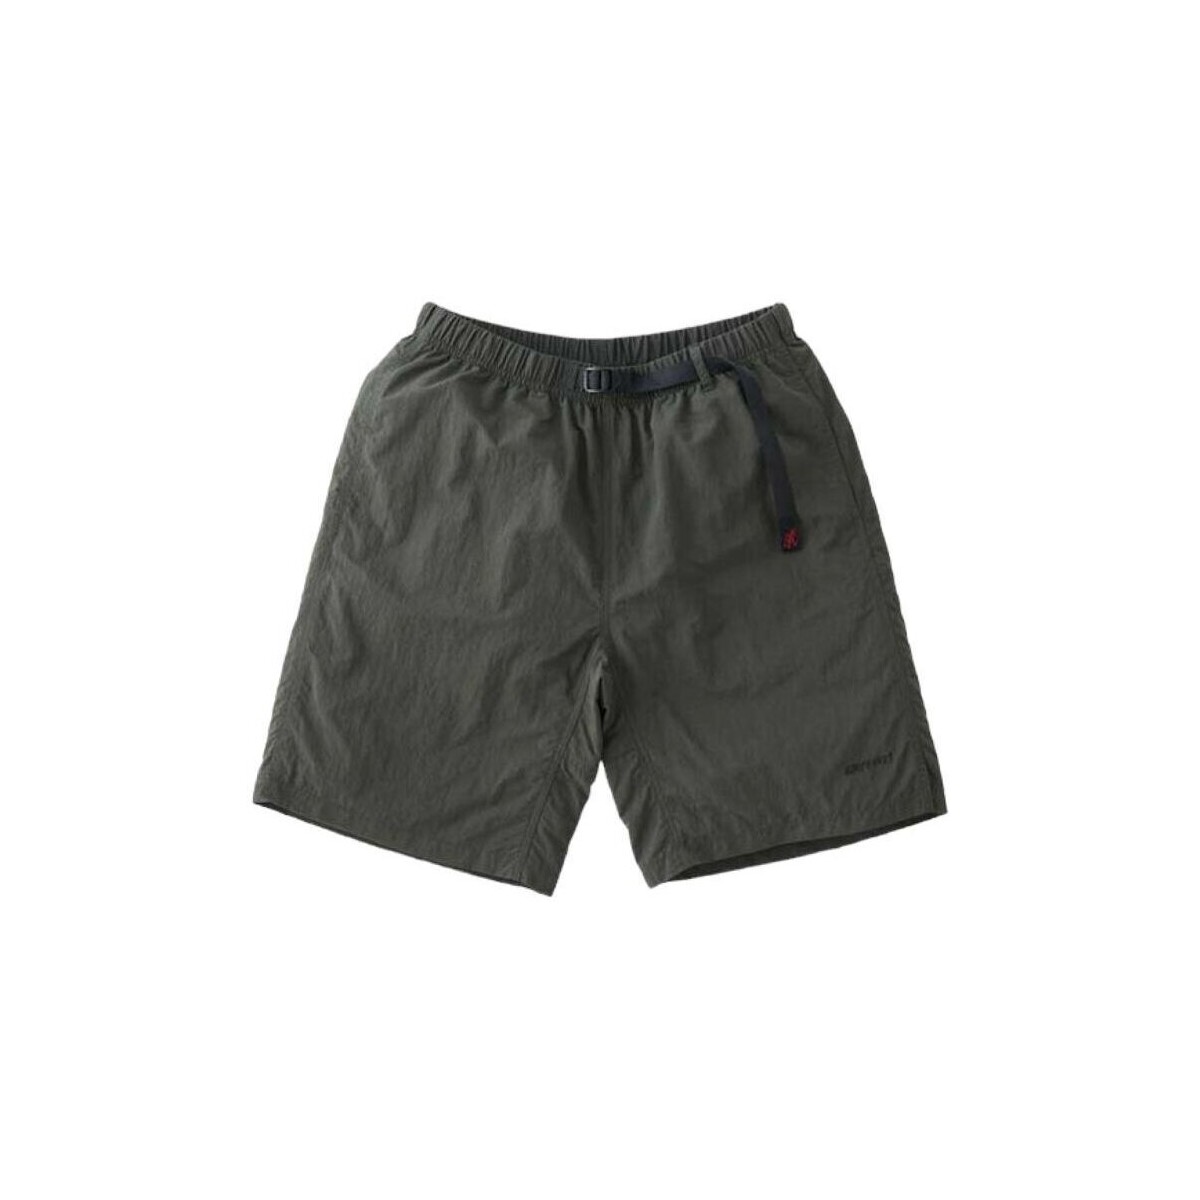 textil Hombre Shorts / Bermudas Gramicci Pantalones cortos Nylon Packable G Hombre Black Ink Gris